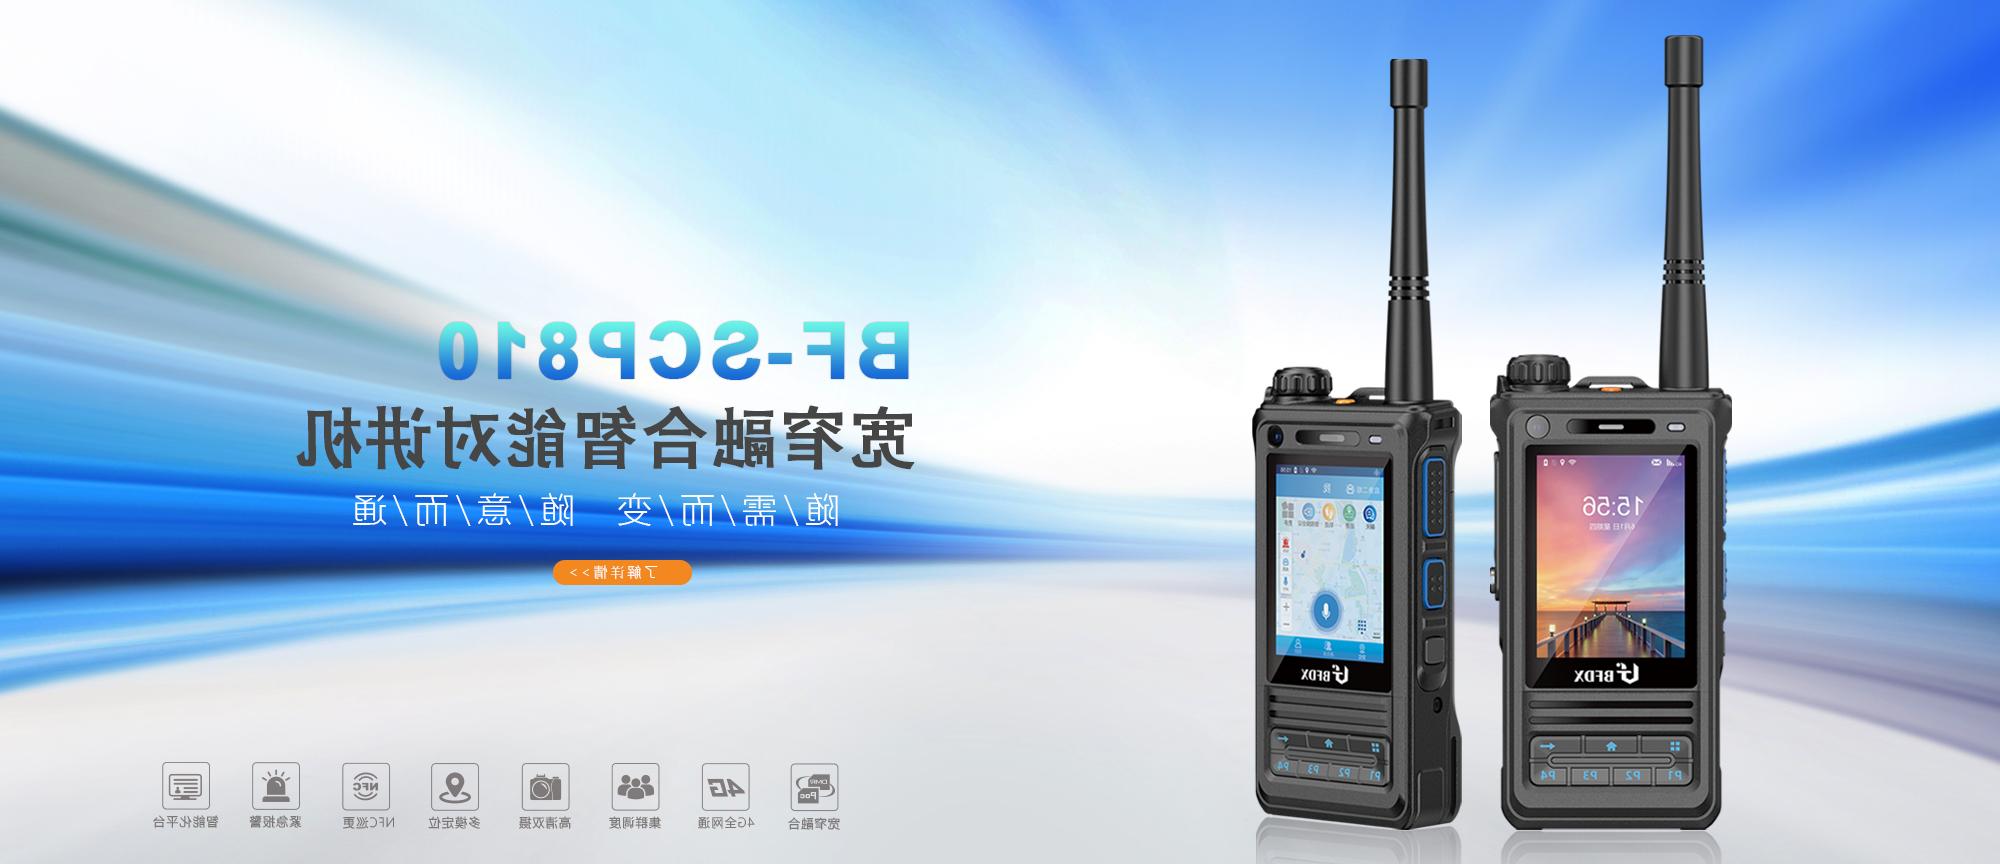 BF-SCP810智能融合通信设备